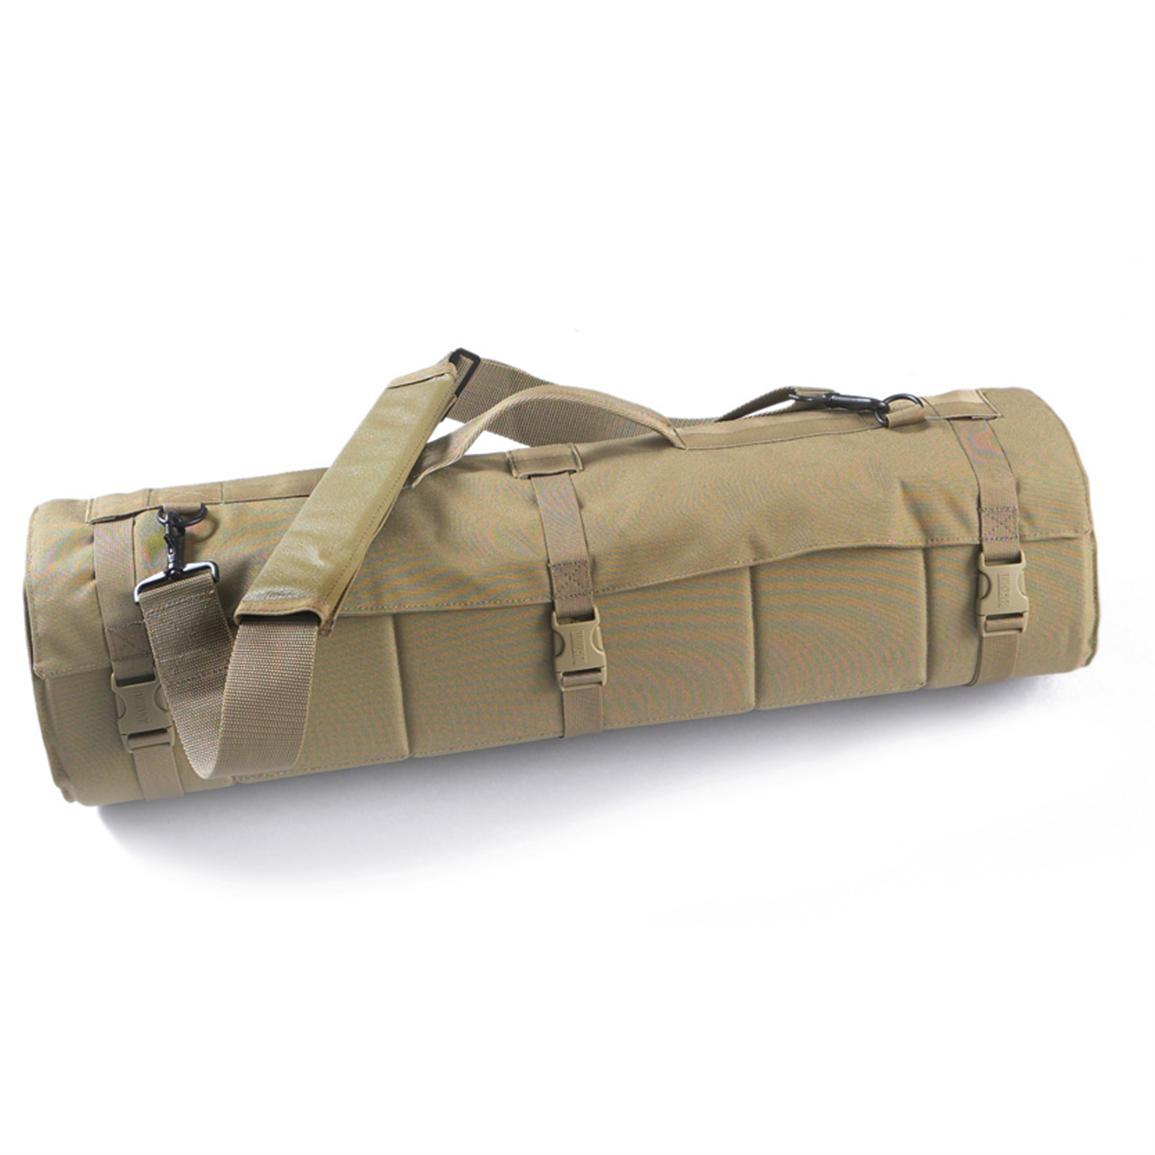 BlackHawk® Pro Shooters Mat, Coyote Tan 20605, Range Bags at Sportsman's Guide